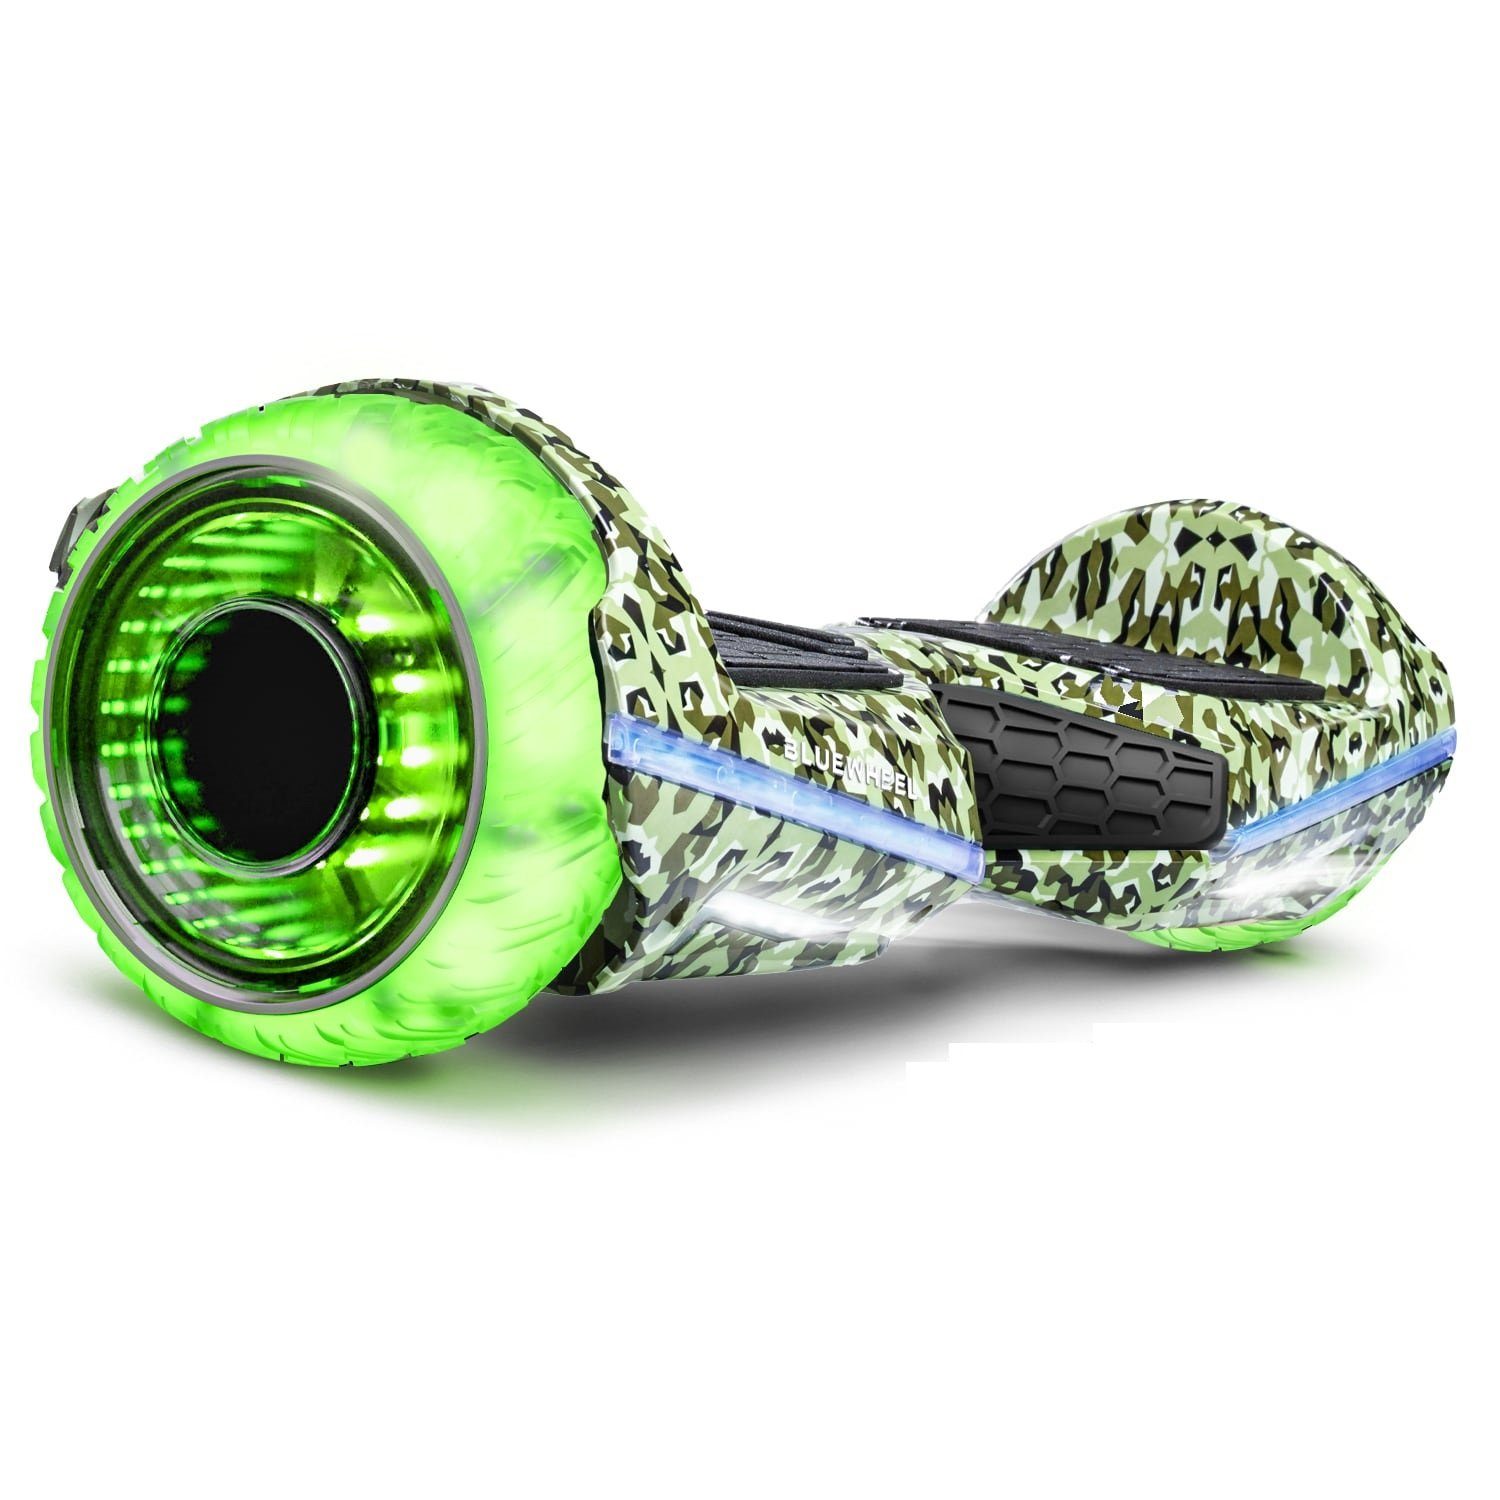 Bluewheel Electromobility Skateboard HX360, 8,5" Reifen, LED-Scheinwerfer